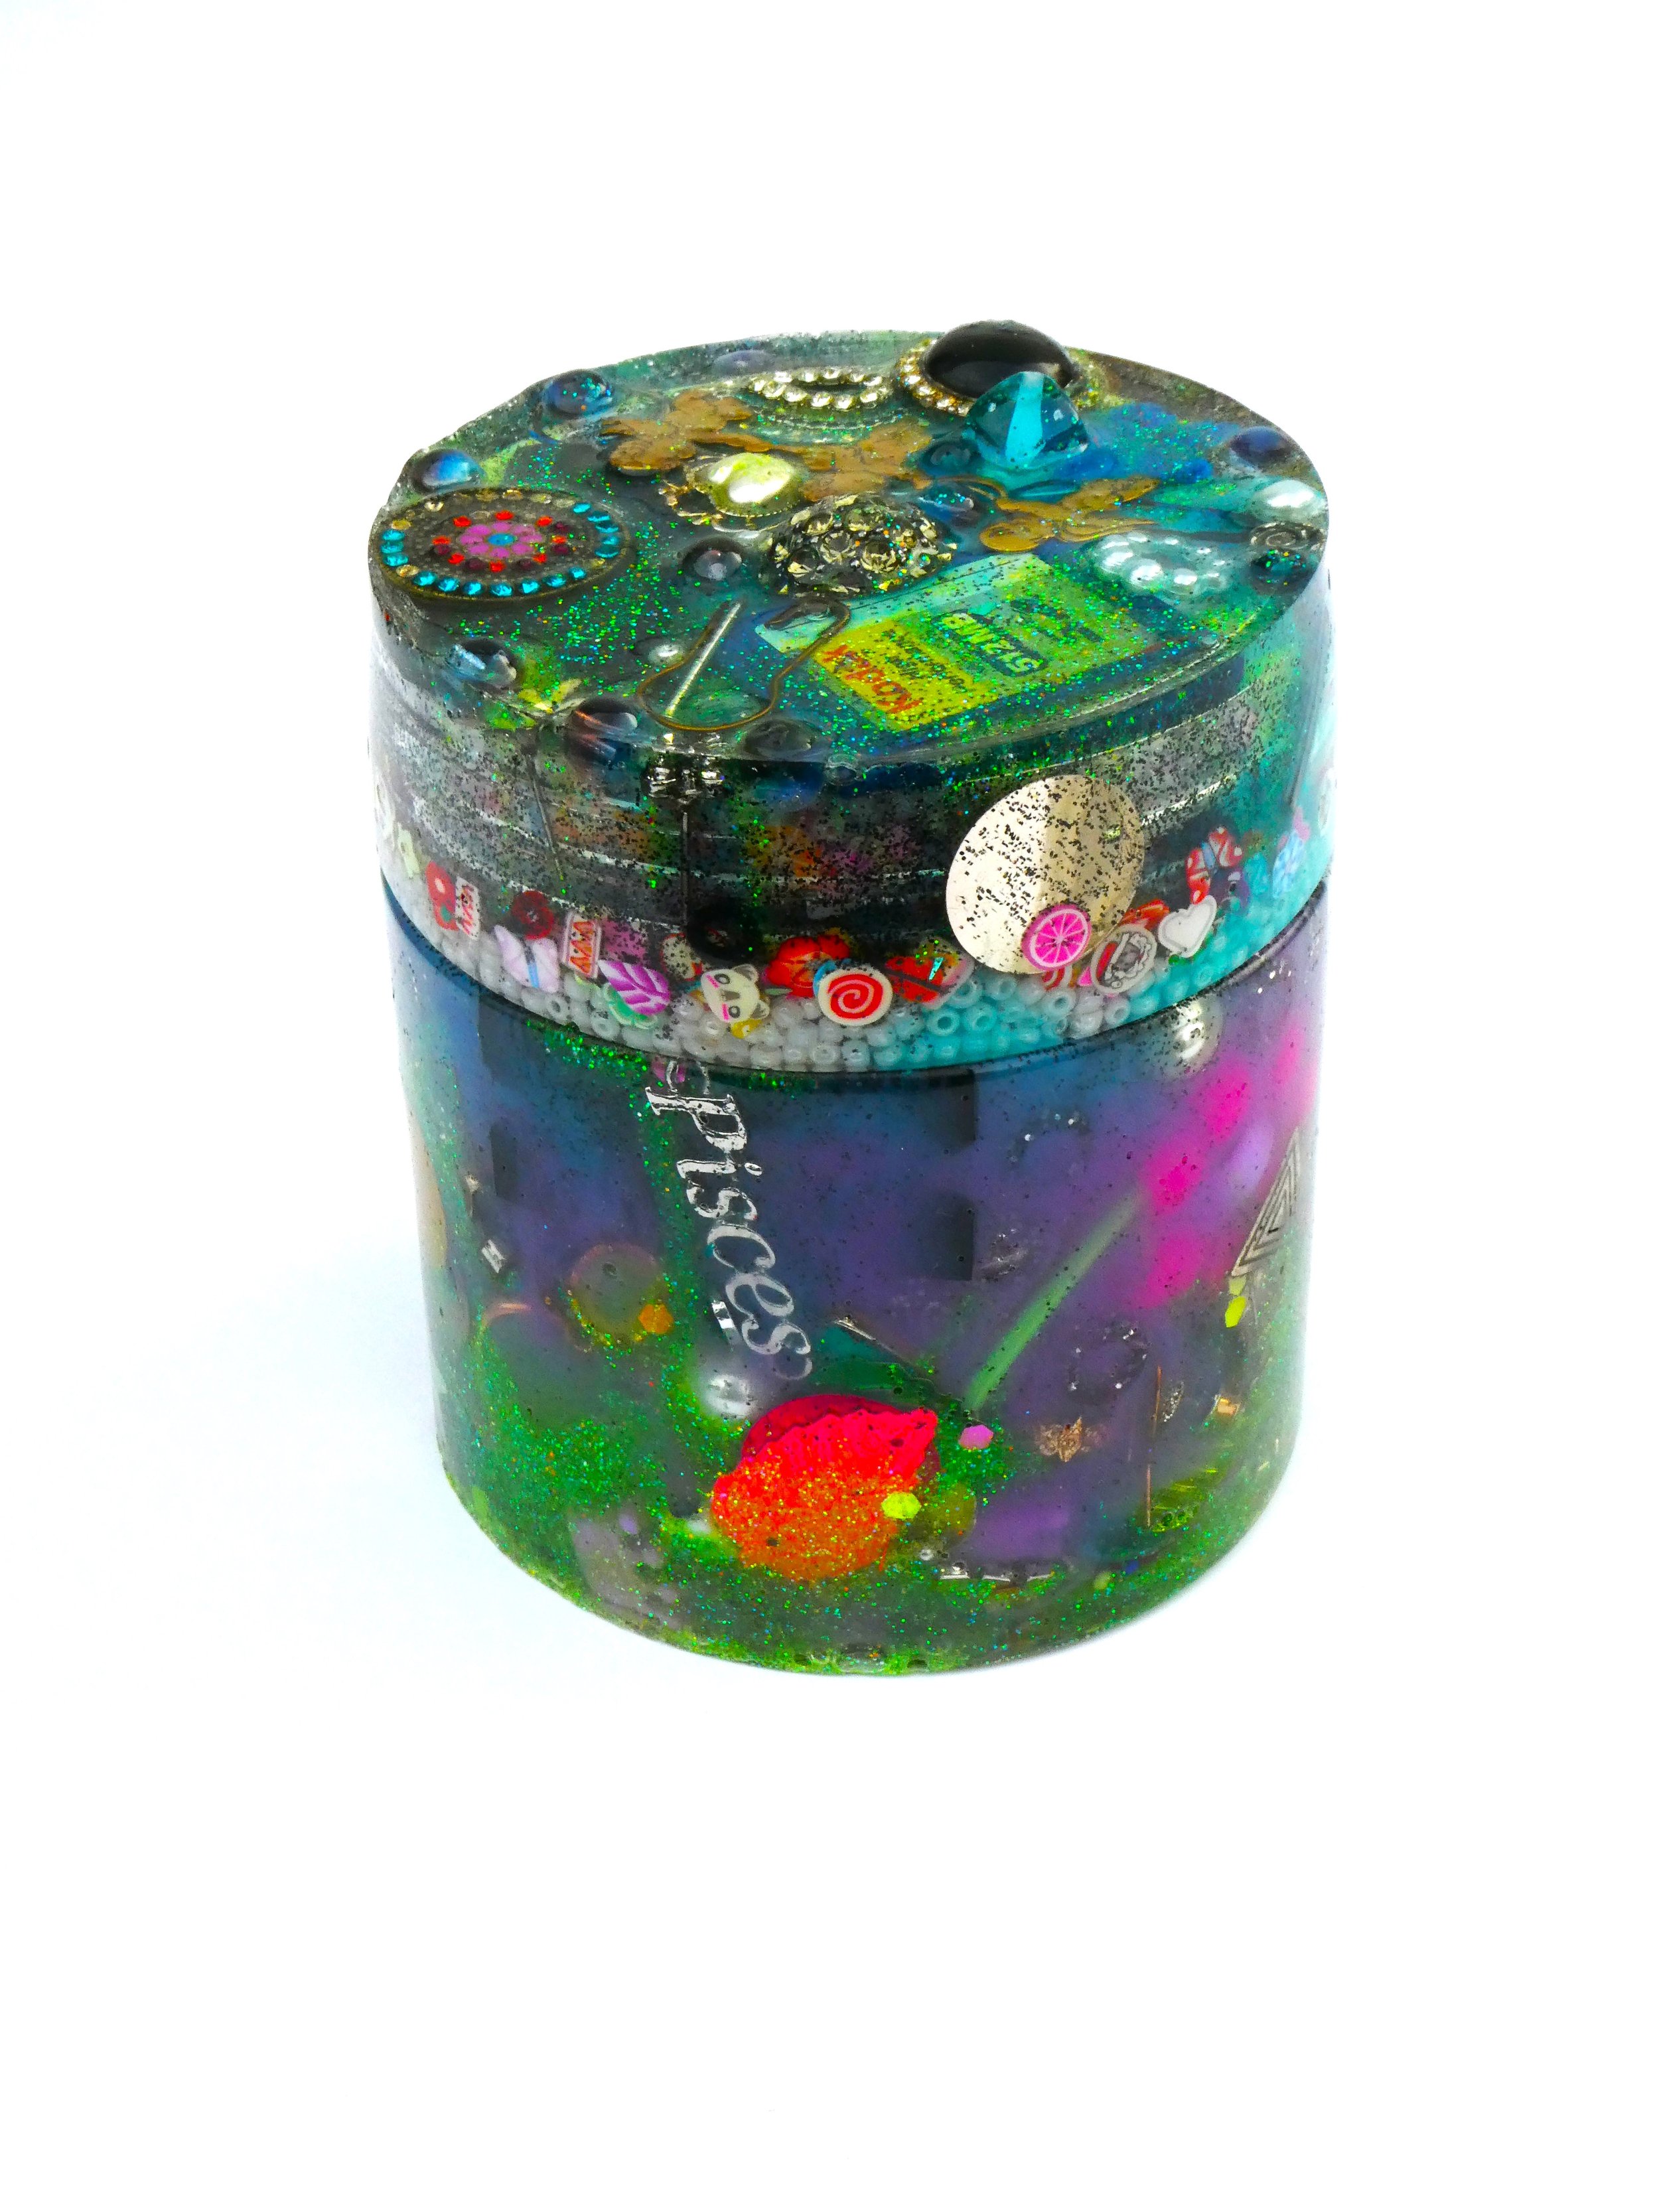 Circular Jar - Multicolored Random Stuff Memory Box  (16)l.JPG